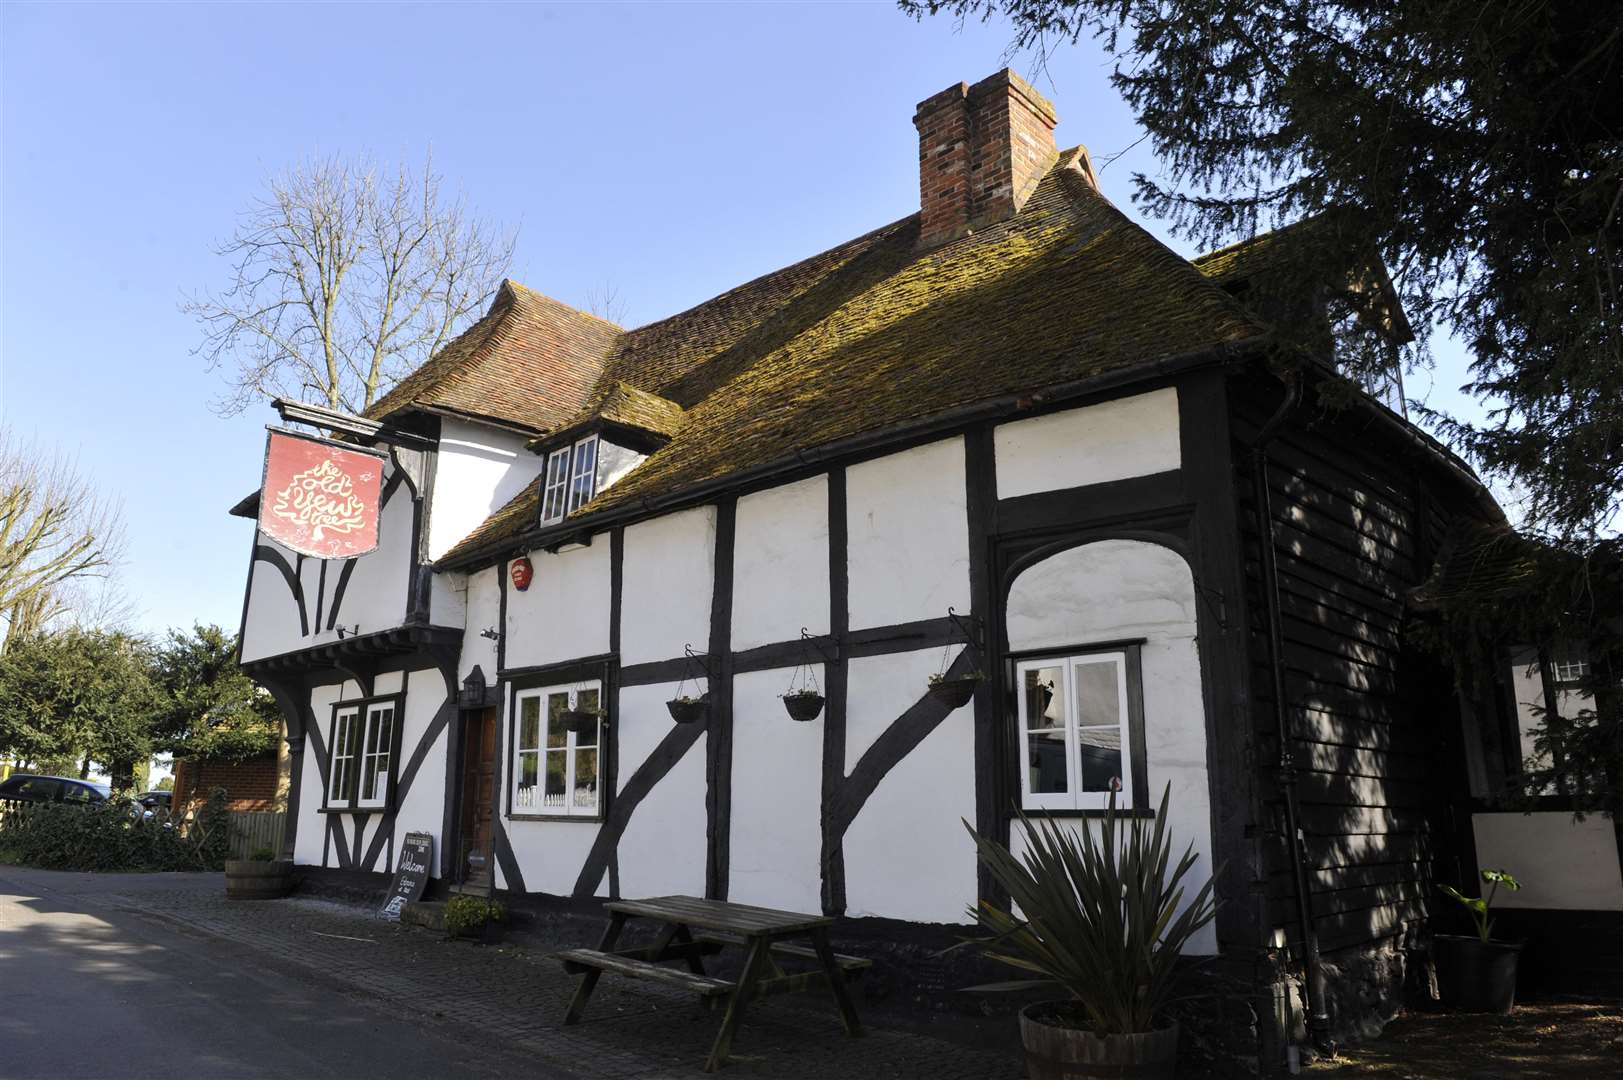 Ye Olde Yew Tree Inn, Westbere Lane, Canterbury. Picture: Tony Flashman